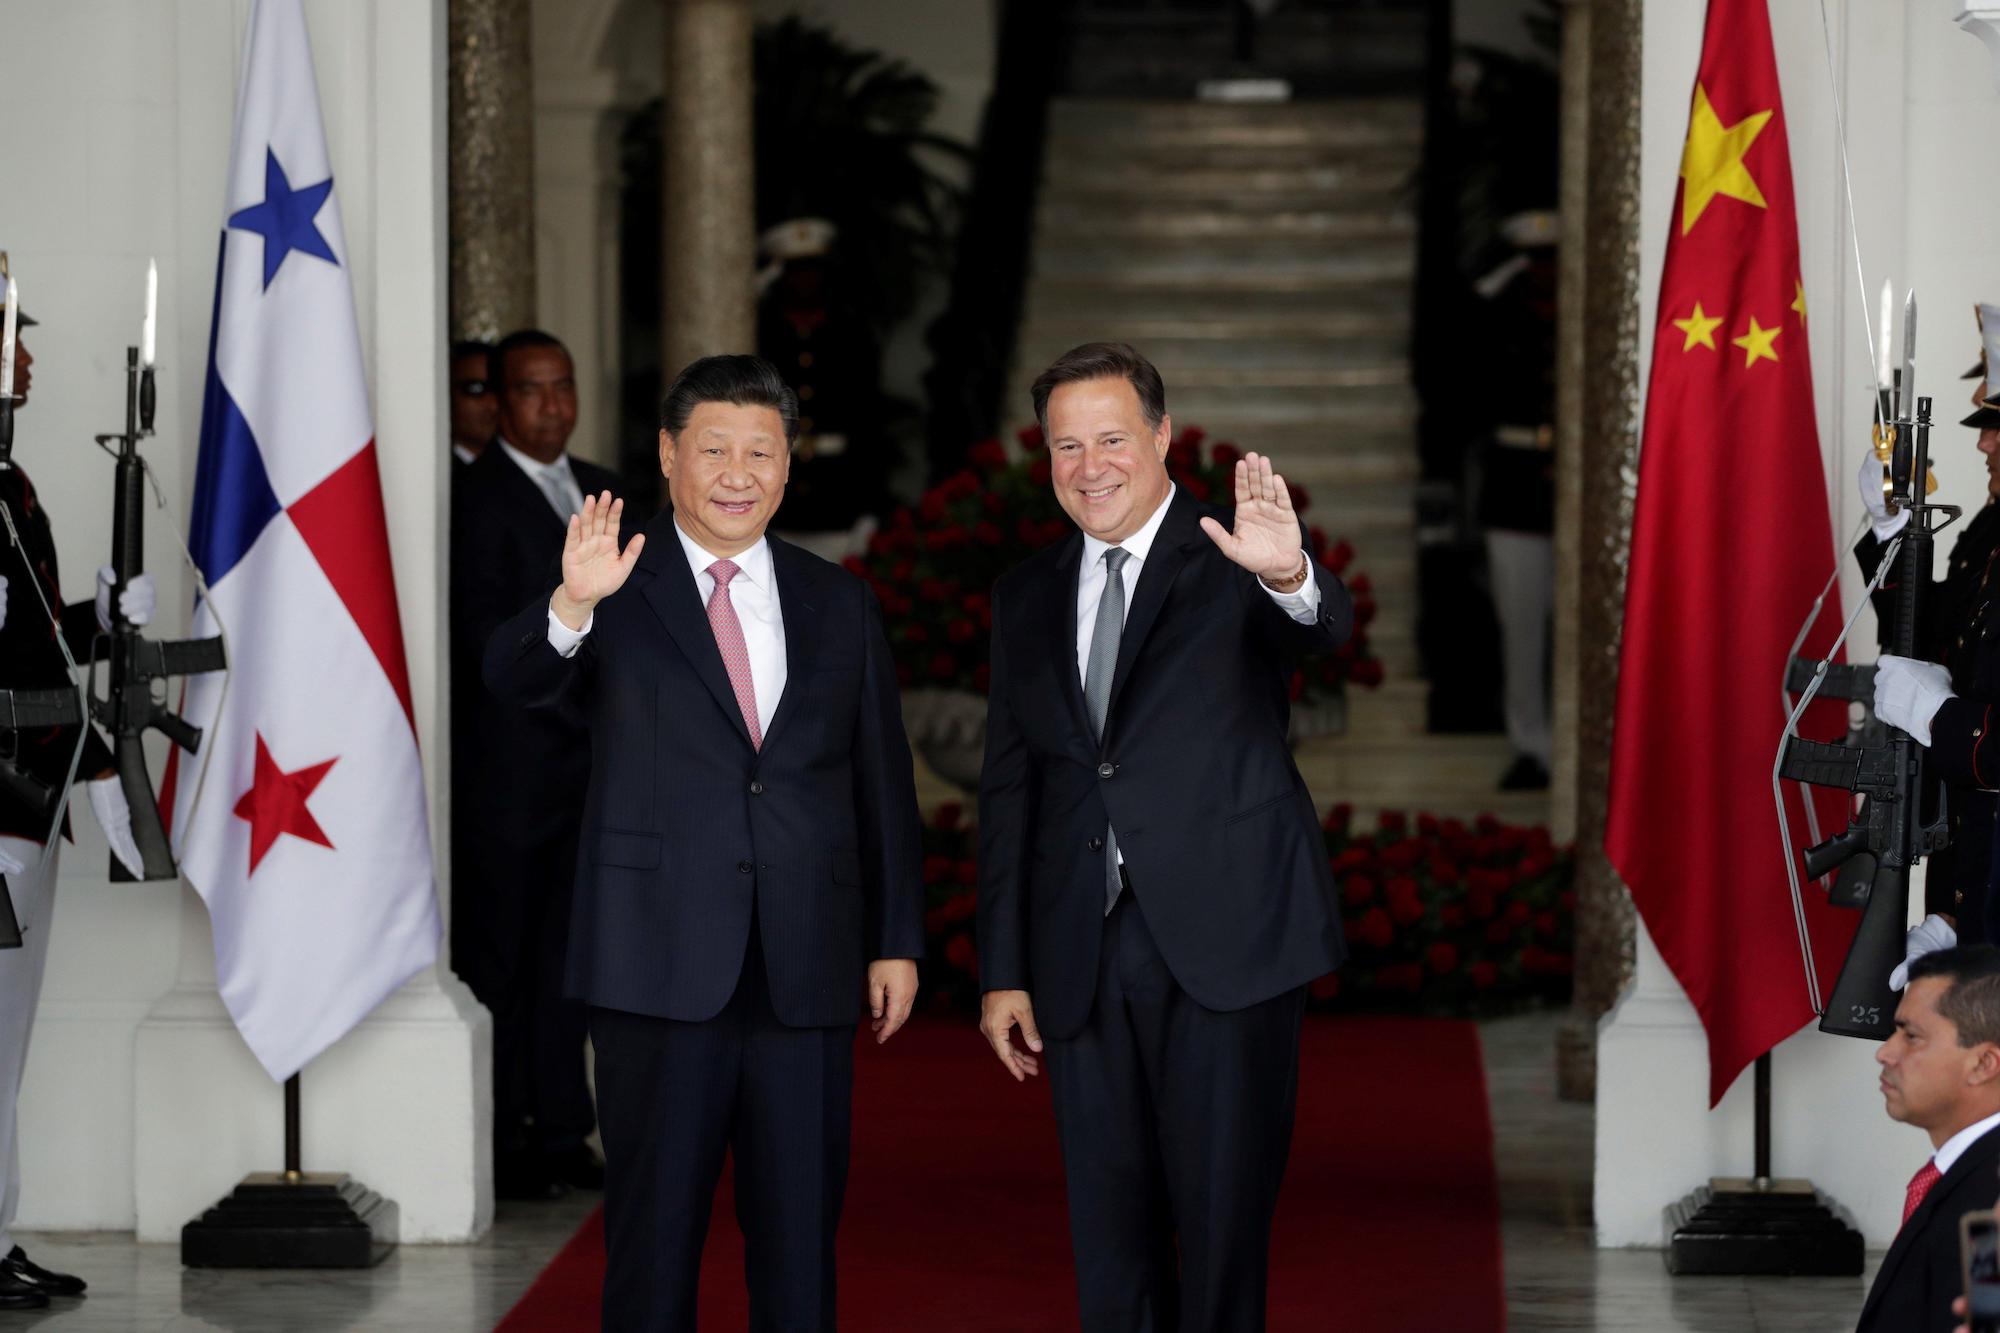 China's President Xi Jinping greets Panama's President Juan Carlos Varela before a meeting at the Presidential Palace in Panama City, Panama